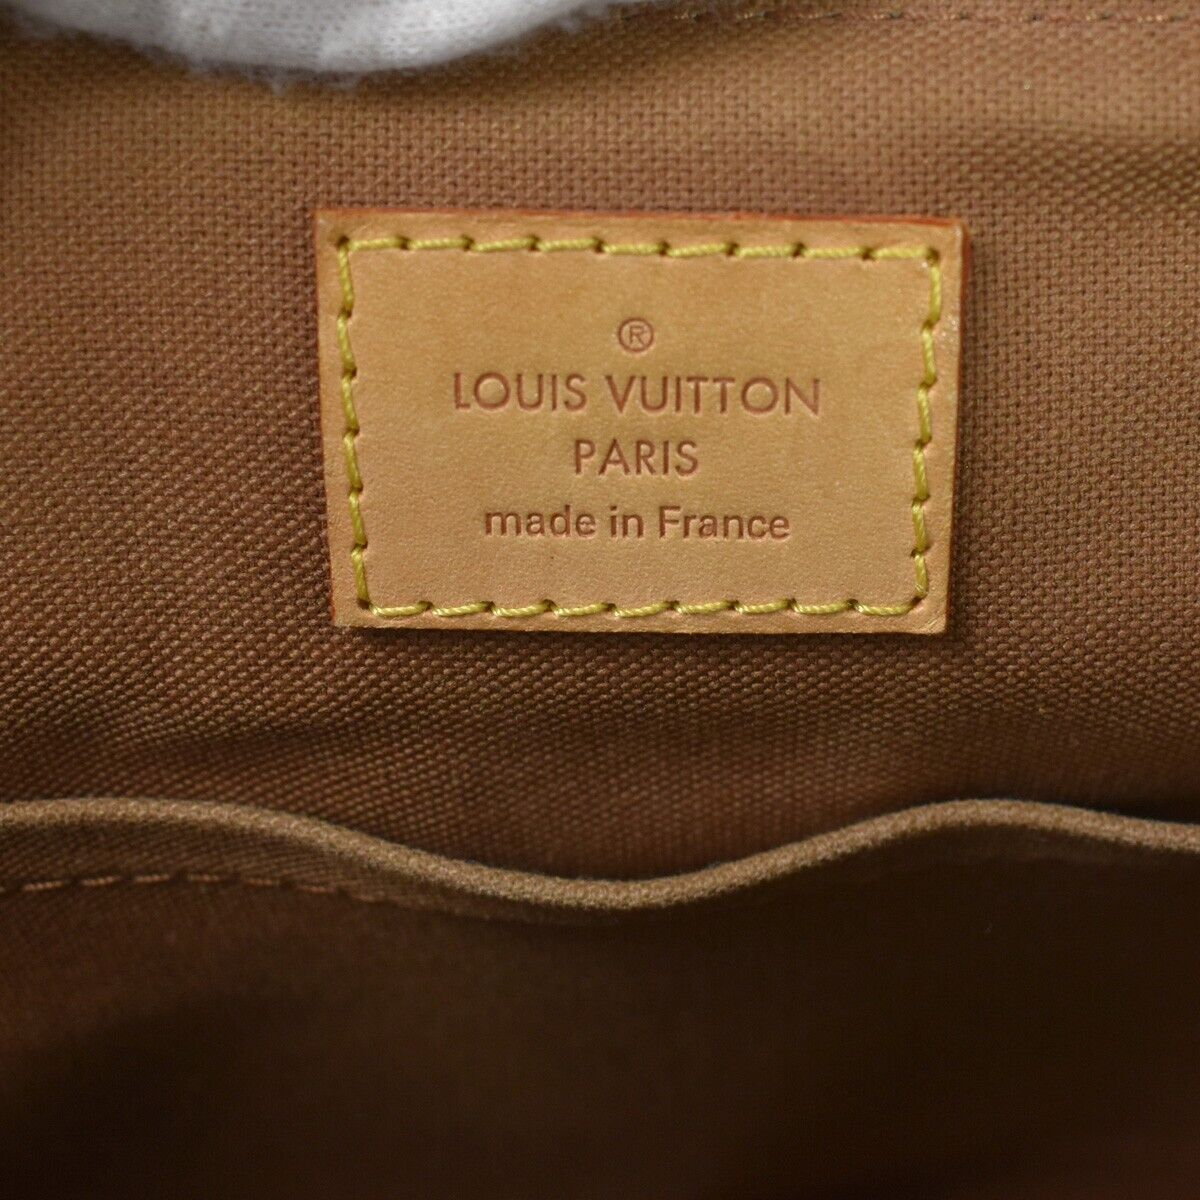 Louis Vuitton Palermo Pm Brown Canvas Handbag (Pre-Owned)